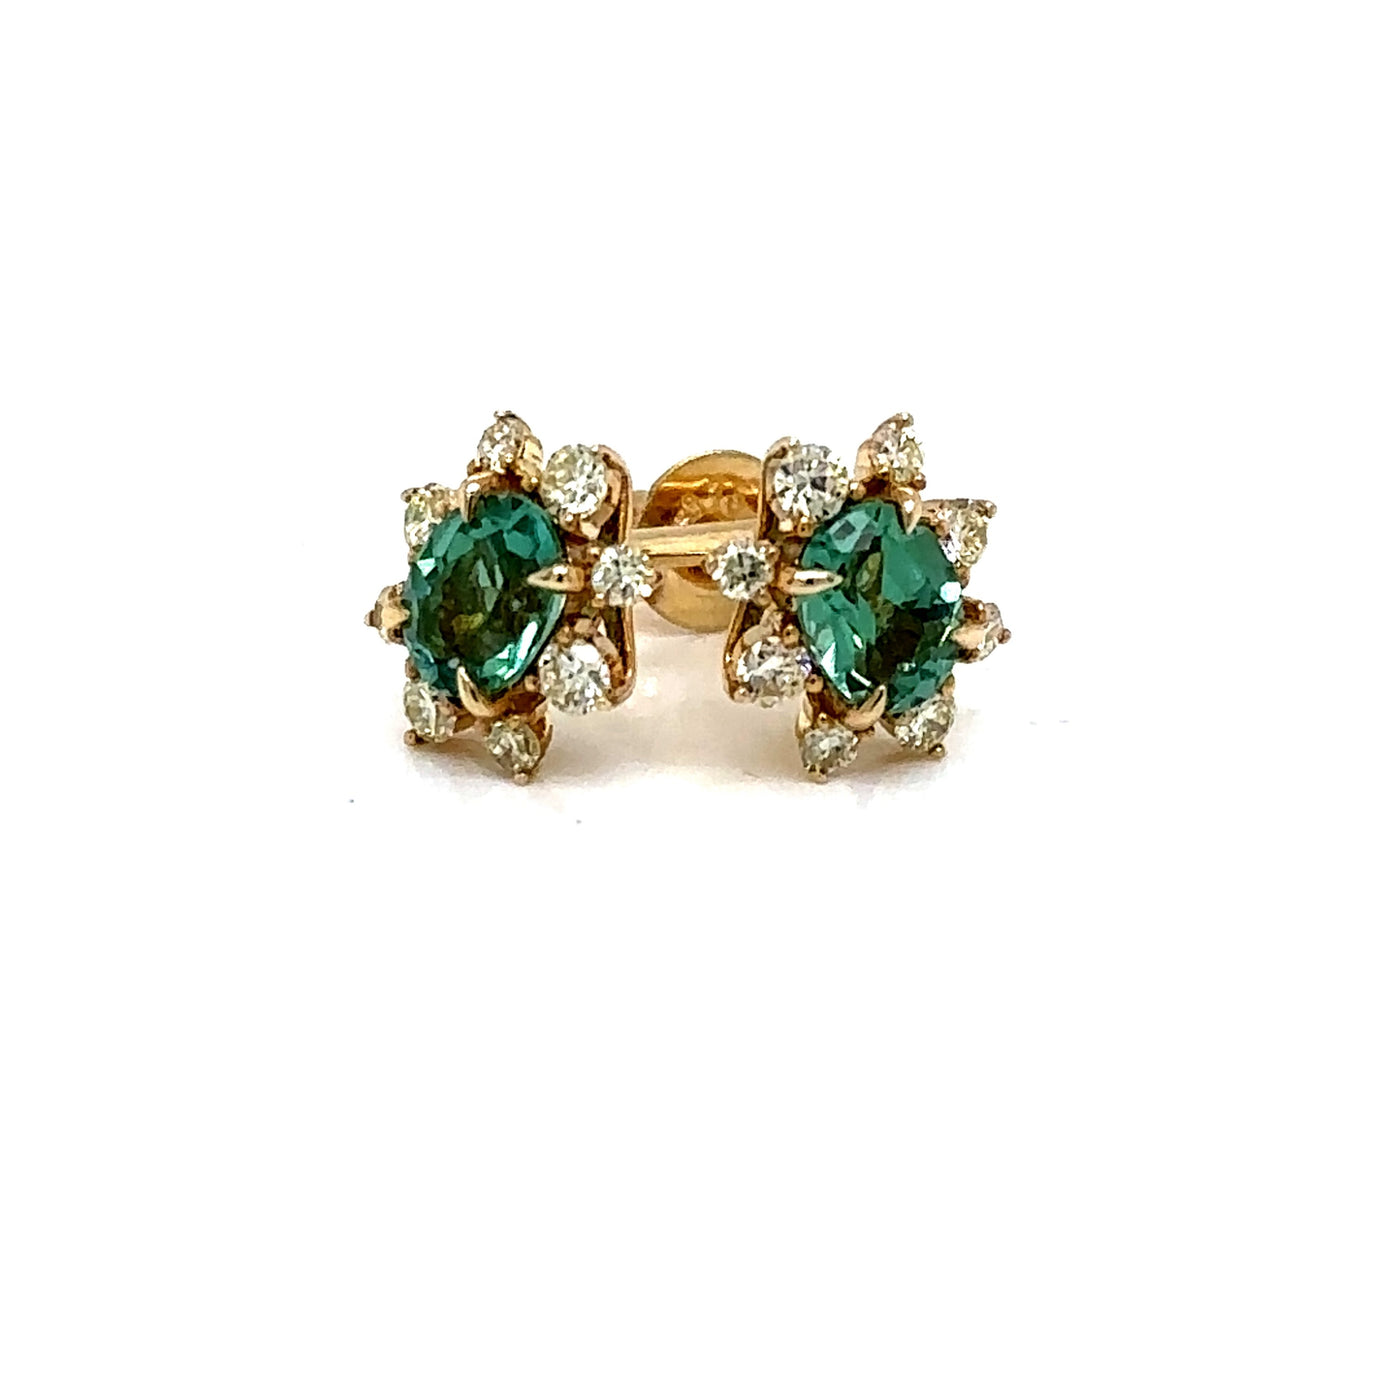 Mint Tourmaline and Diamond earrings